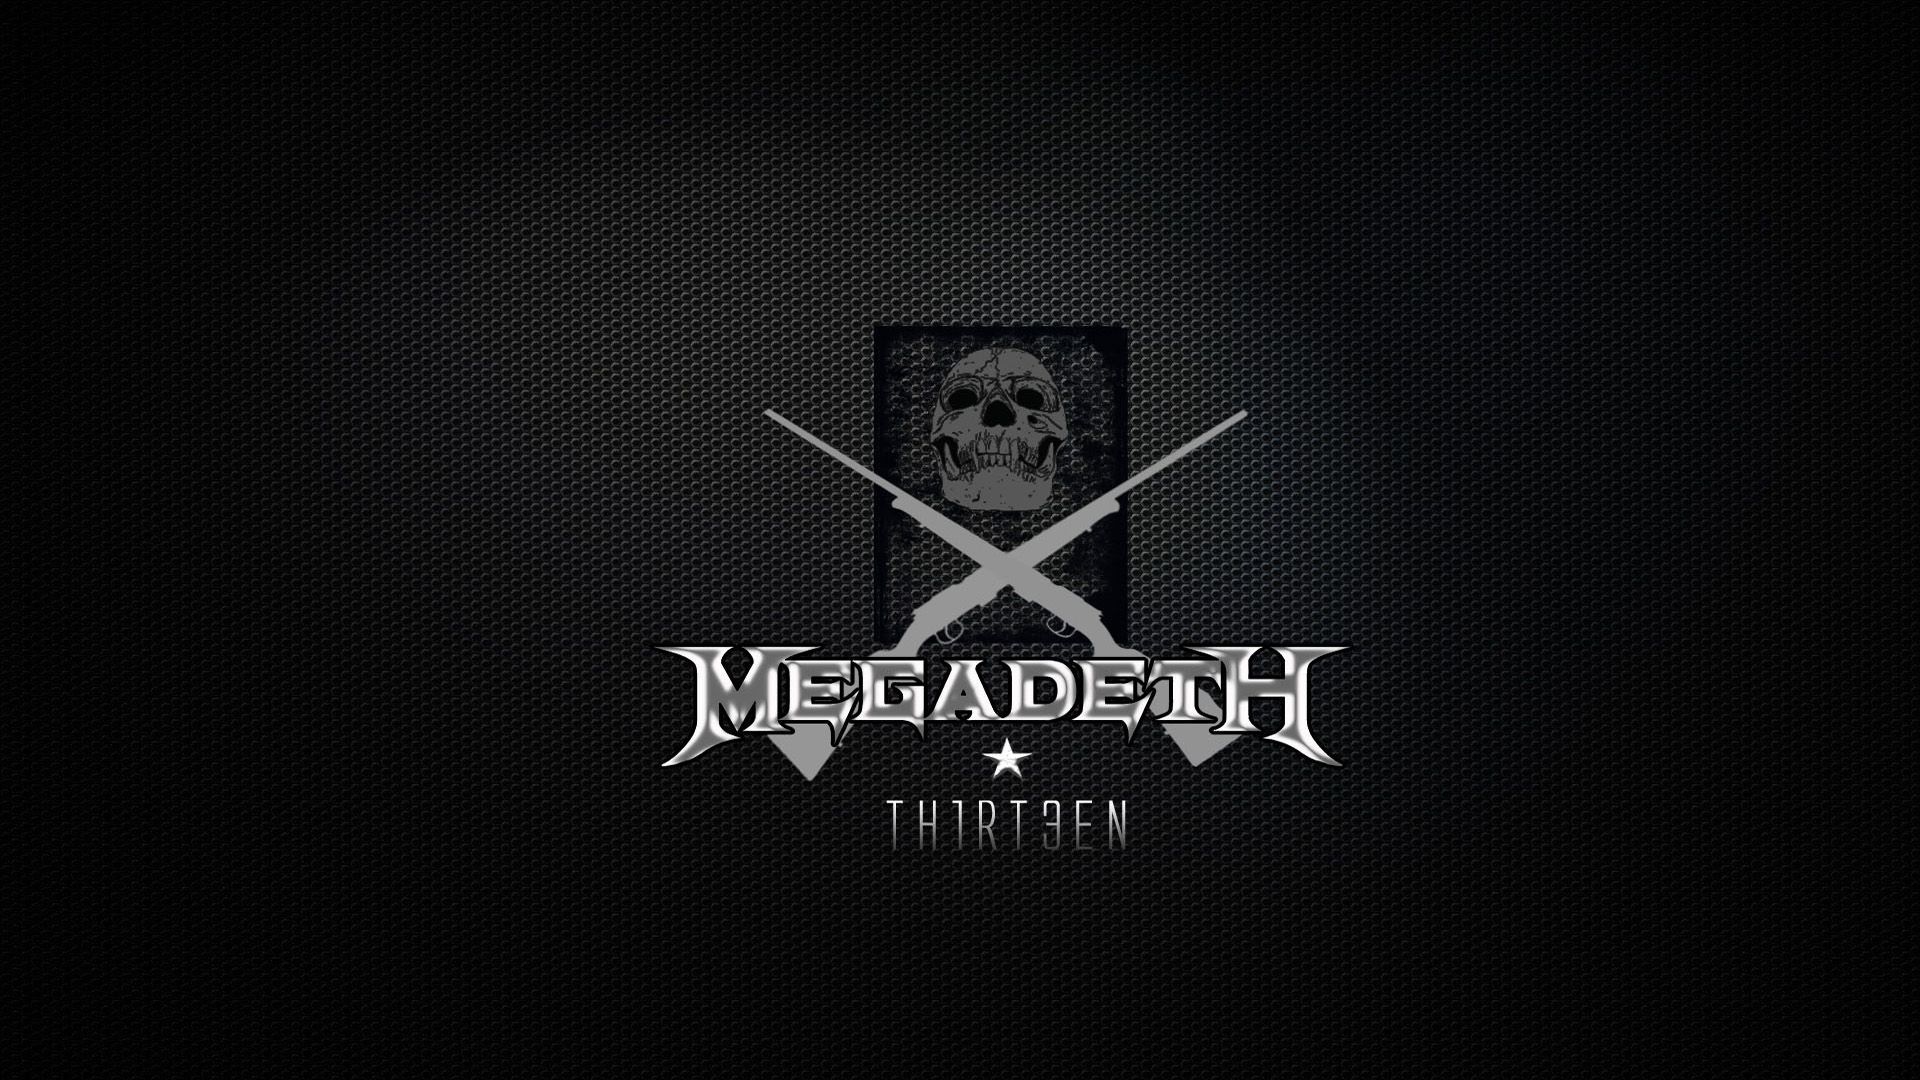 Megadeth Computer Wallpapers, Desktop Backgrounds 1920x1080 ID